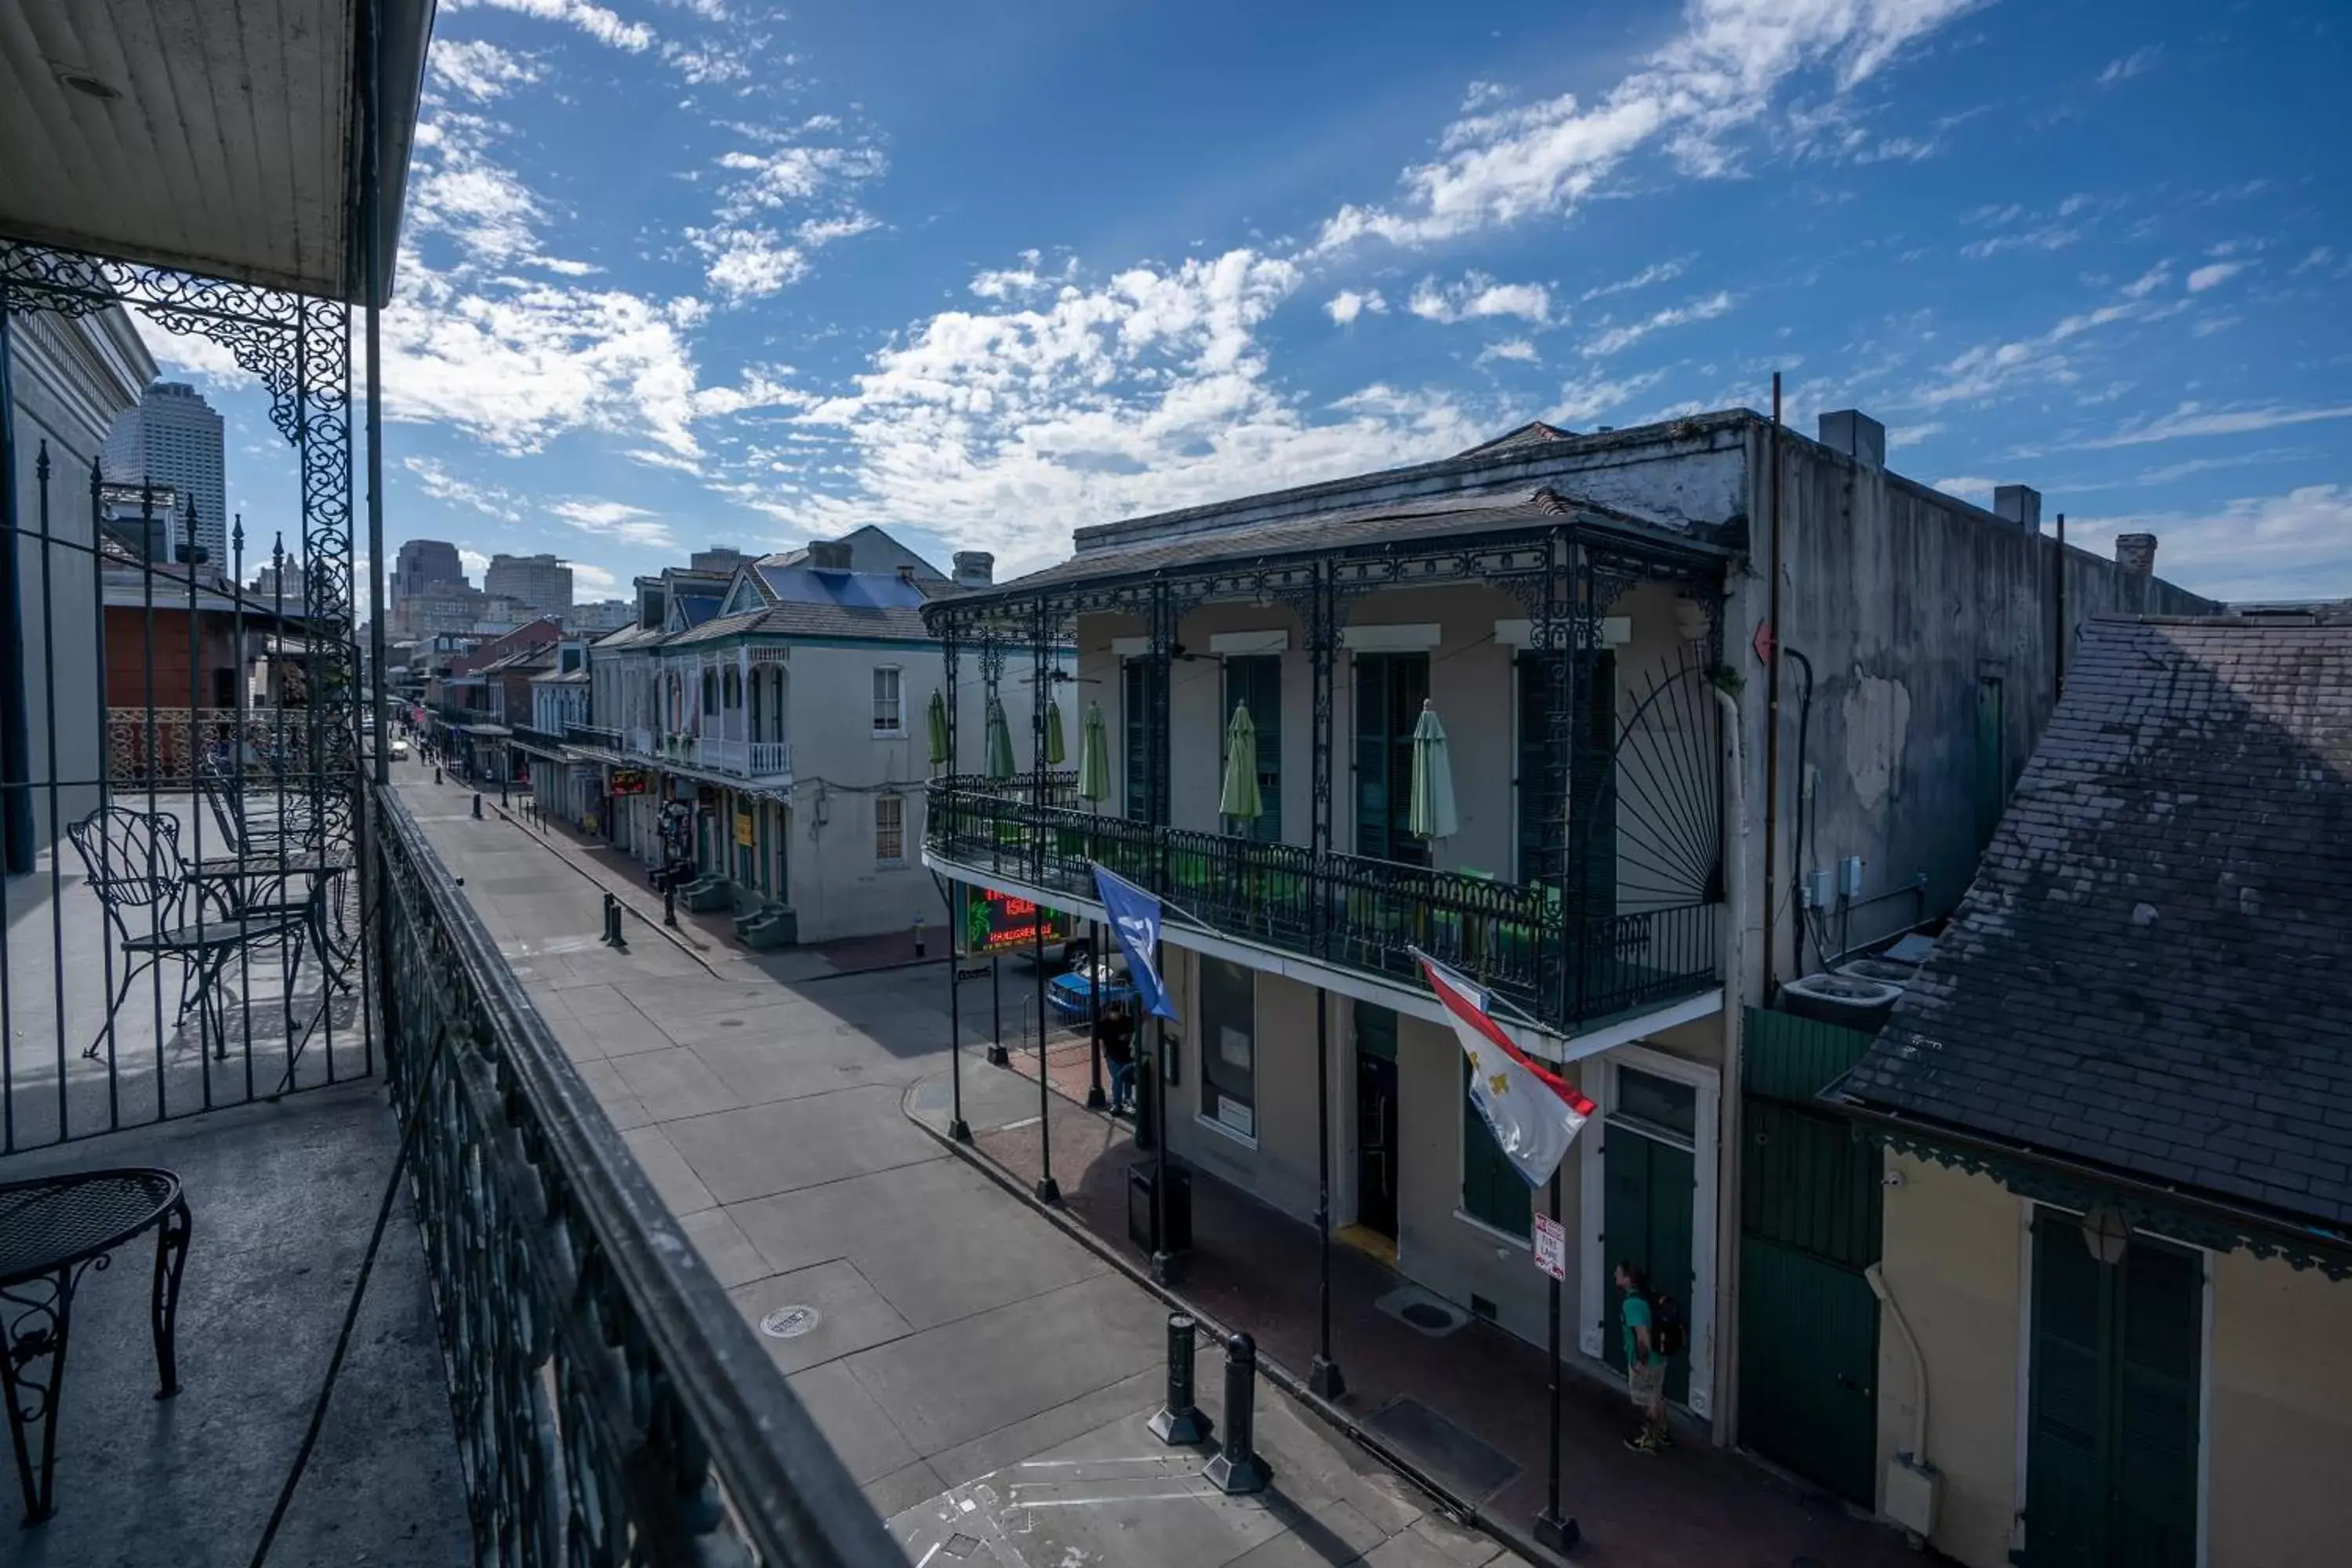 Street view in Bourbon Orleans Hotel